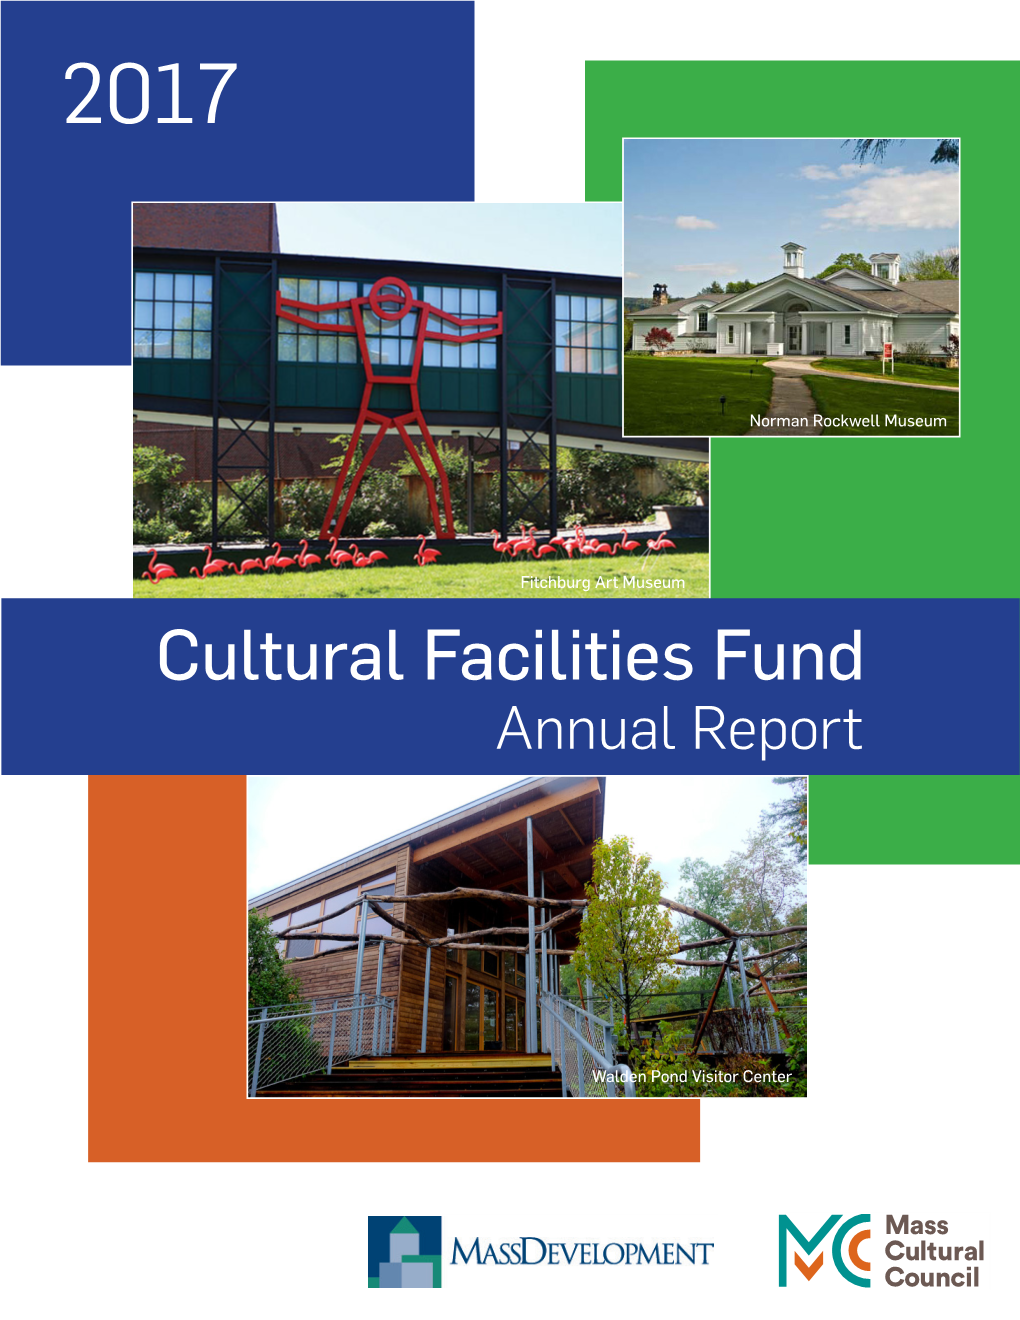 Cultural Facilities Fund Annual Report